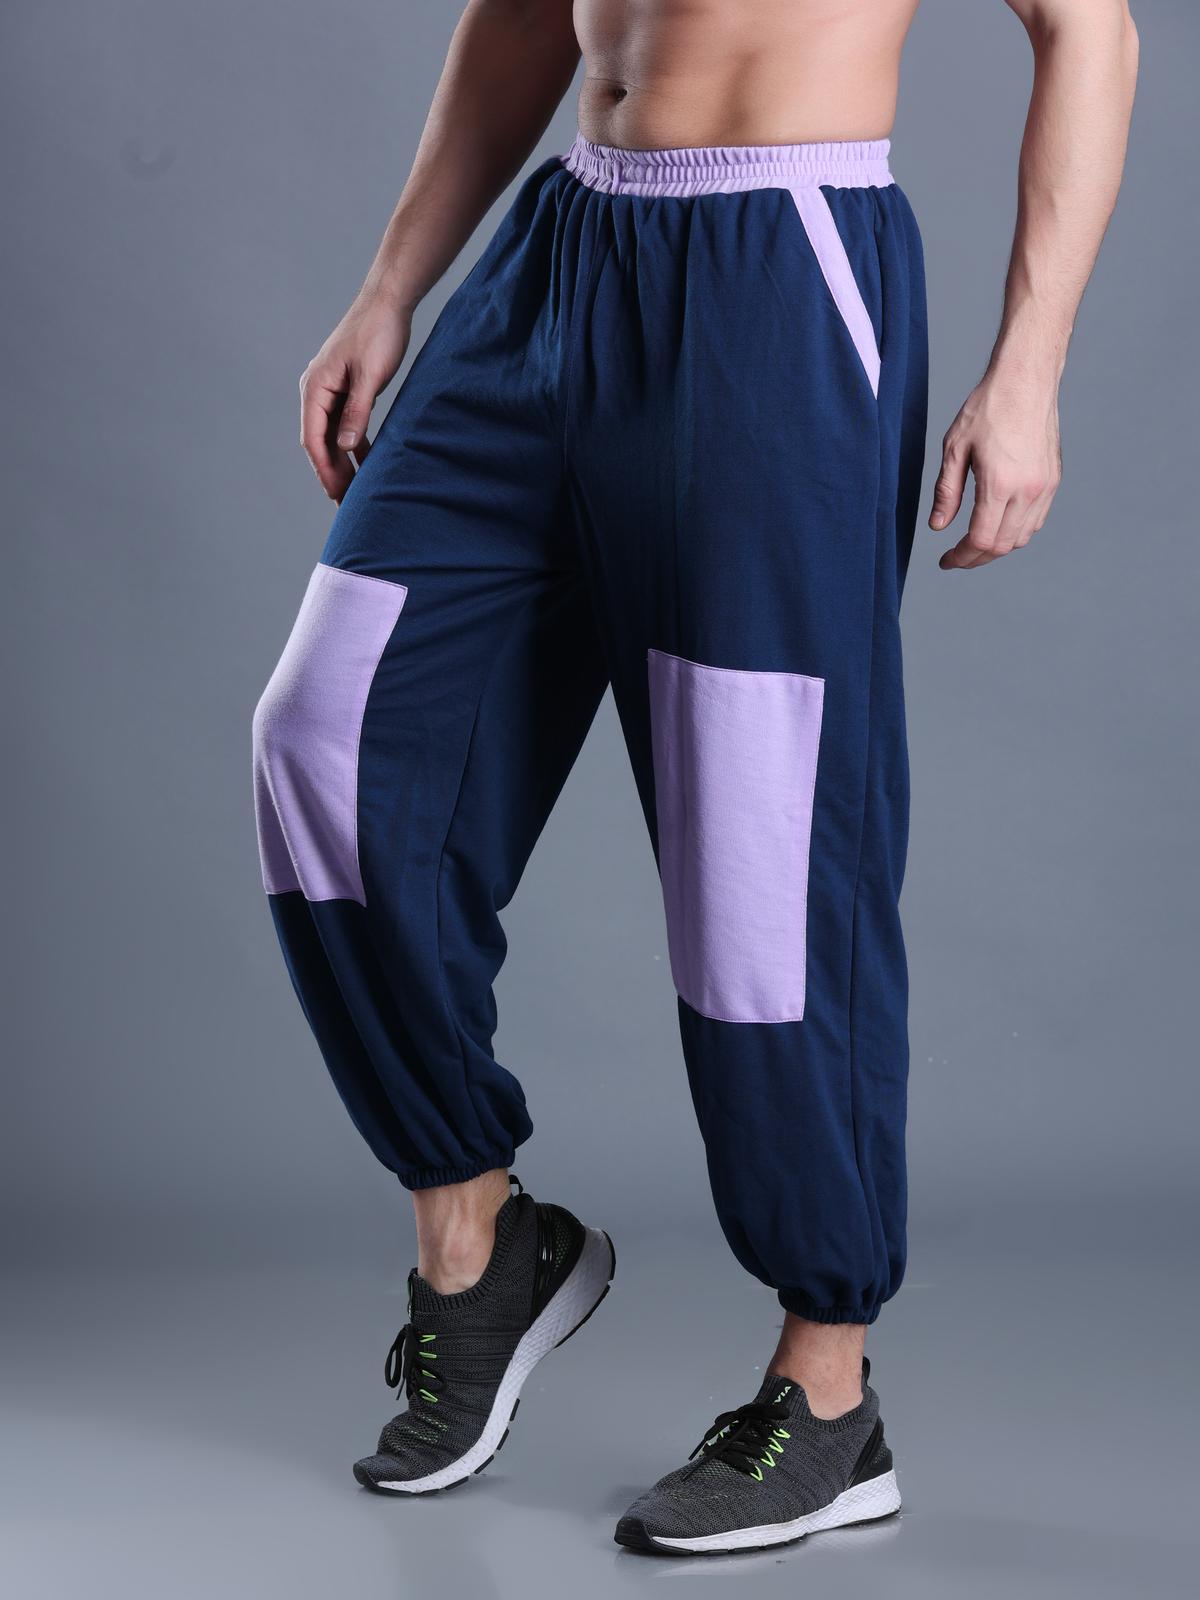 Men Blue Lavender Street Hoppers - Relaxed Fit Dance Lounge Pyjamas